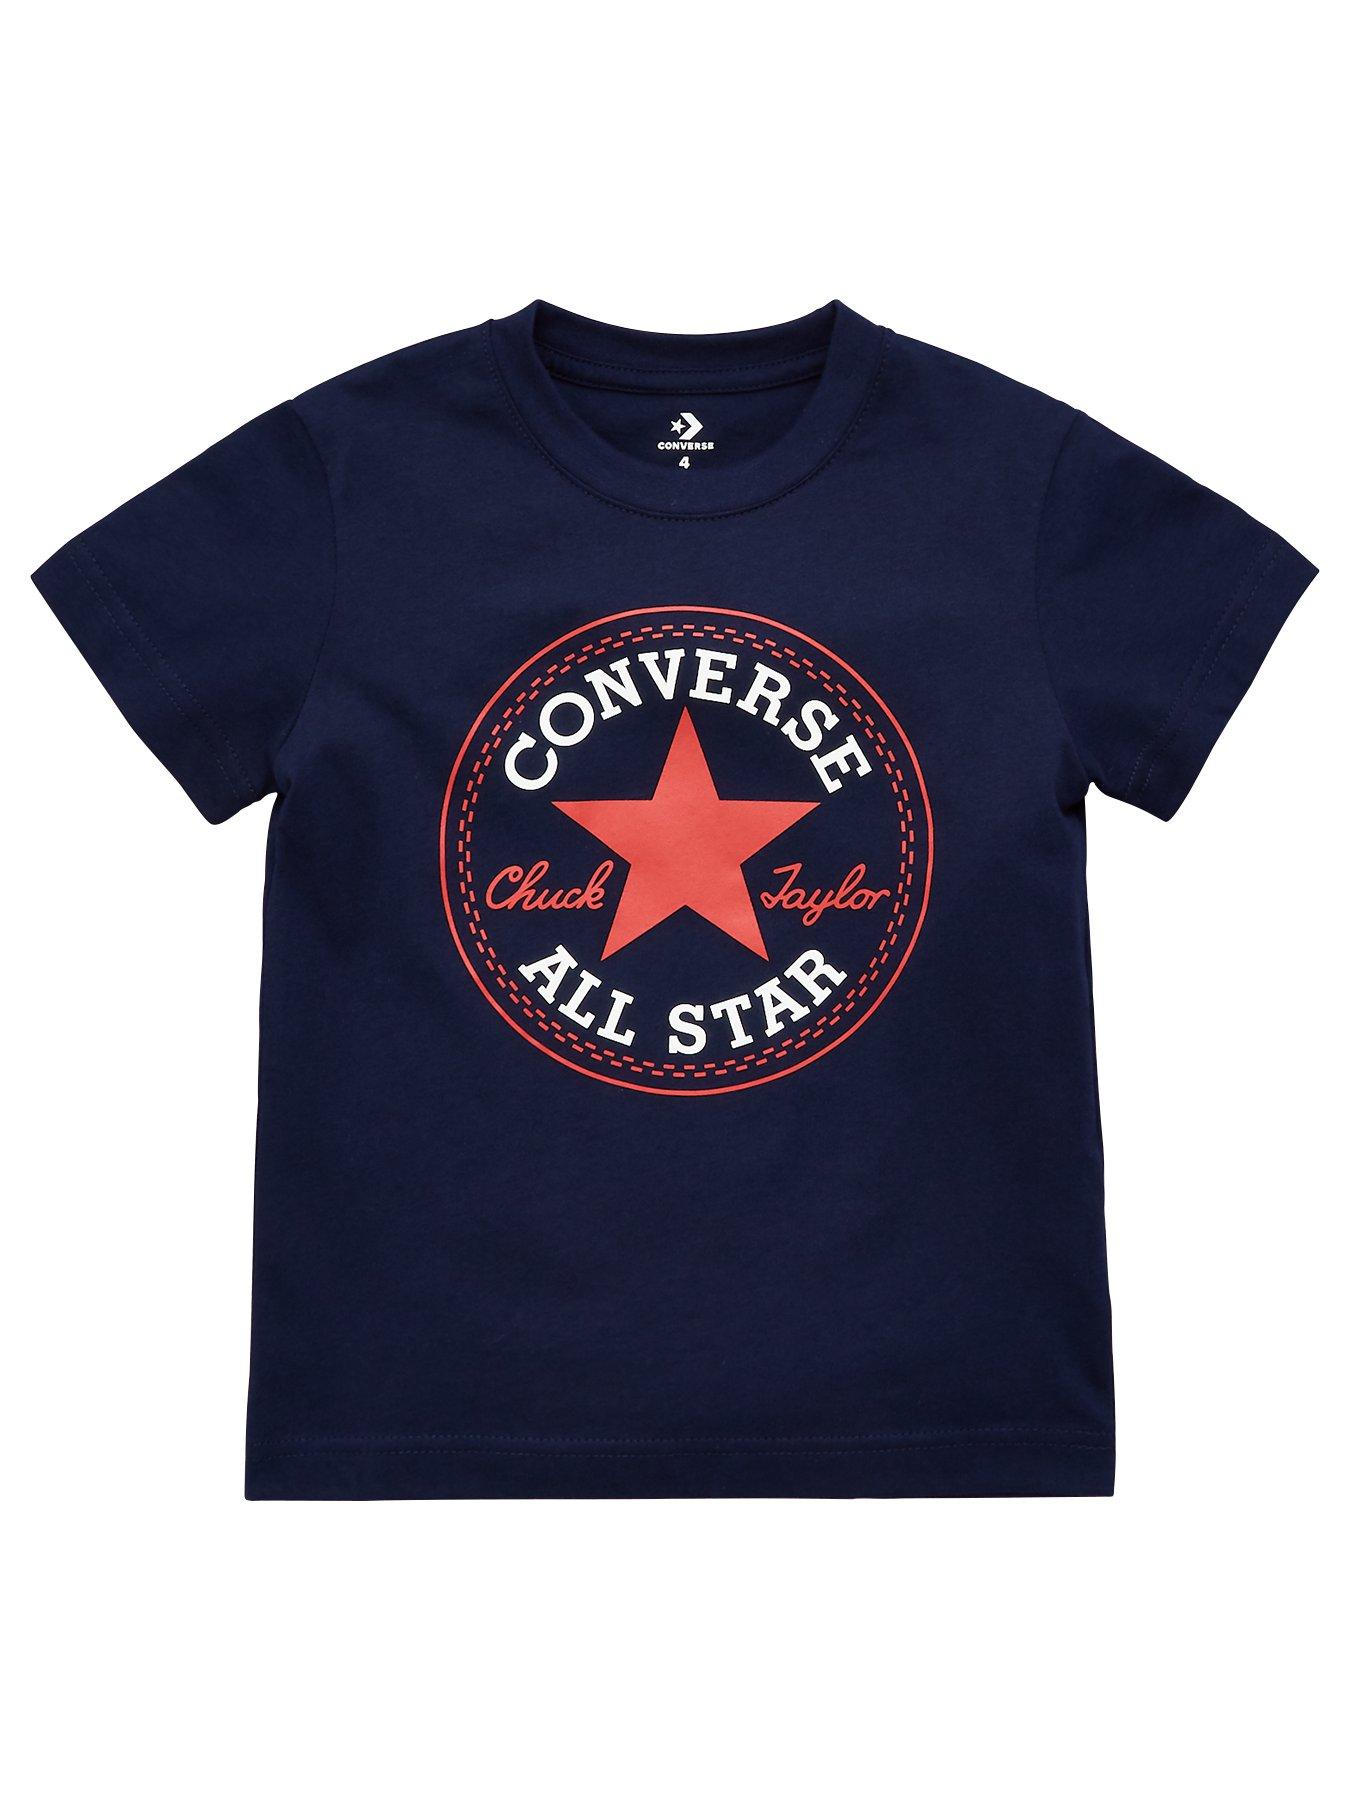 baby converse t shirt